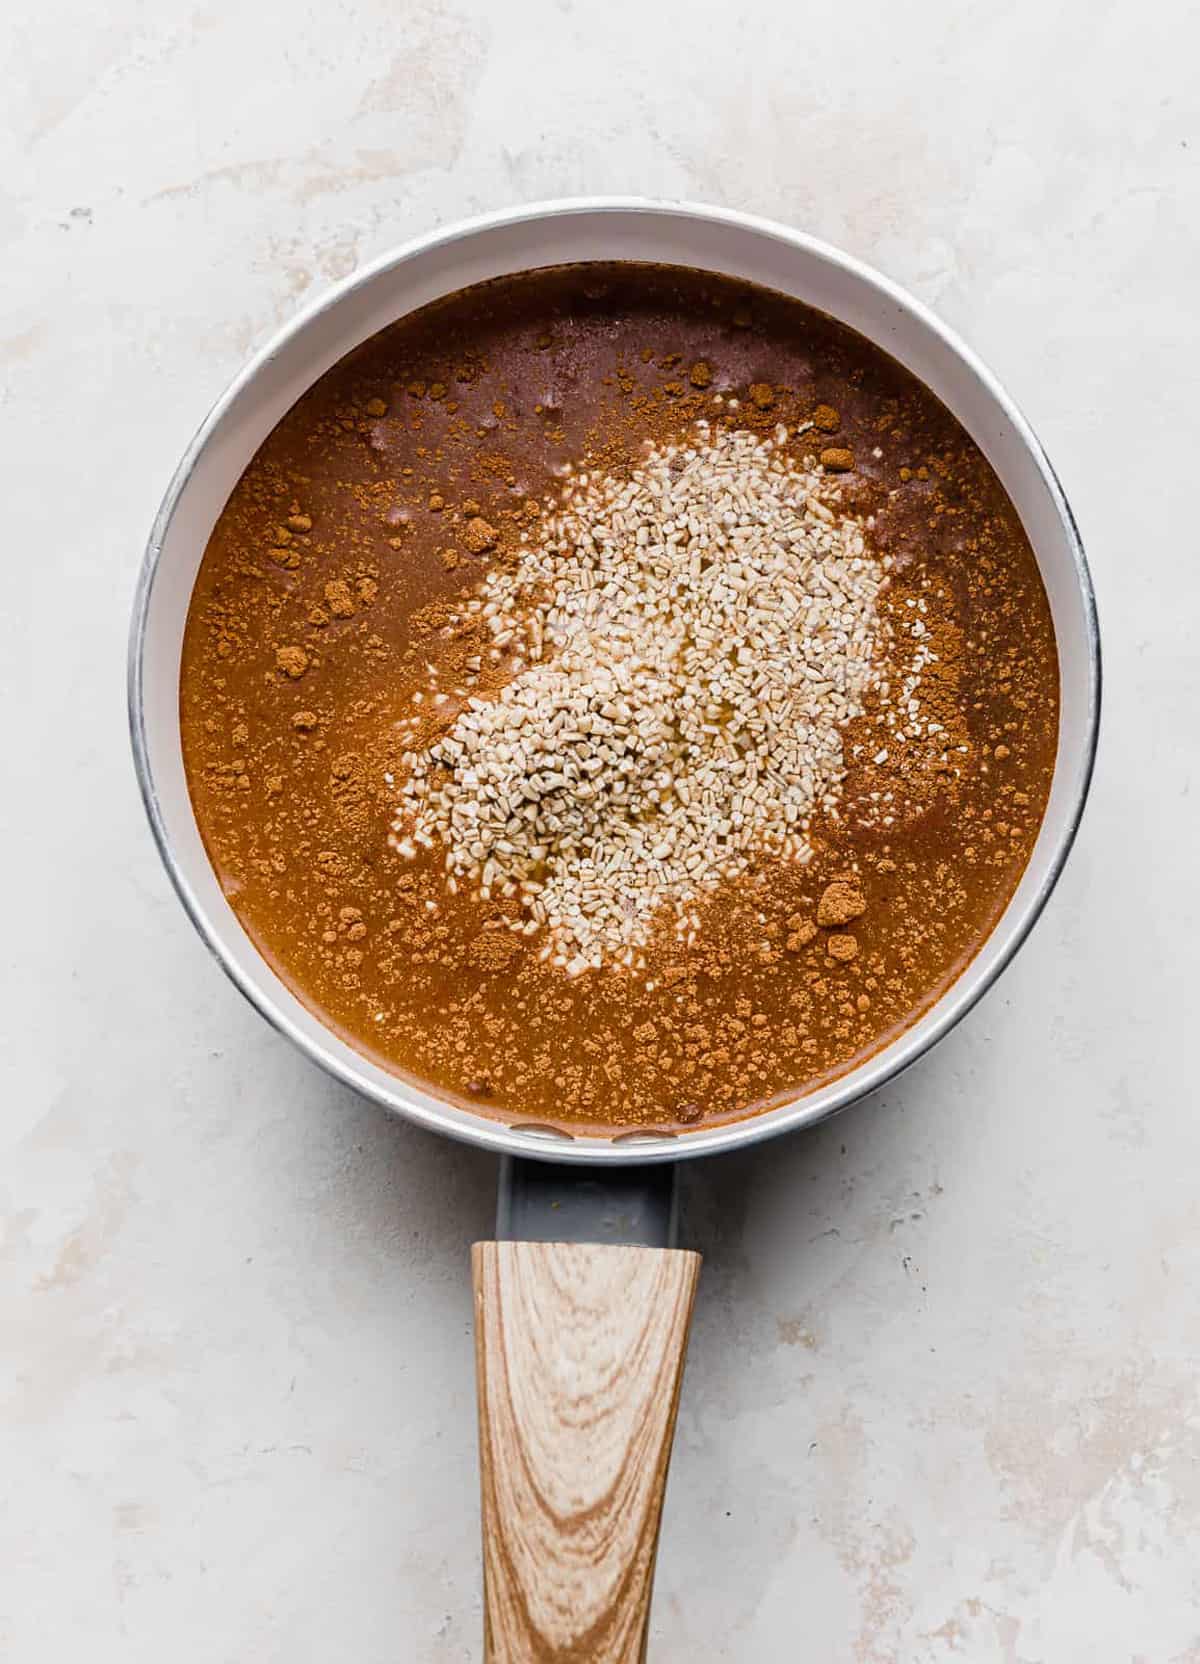 Raw steel cut oats in a white saucepan amongst a amber colored liquid.